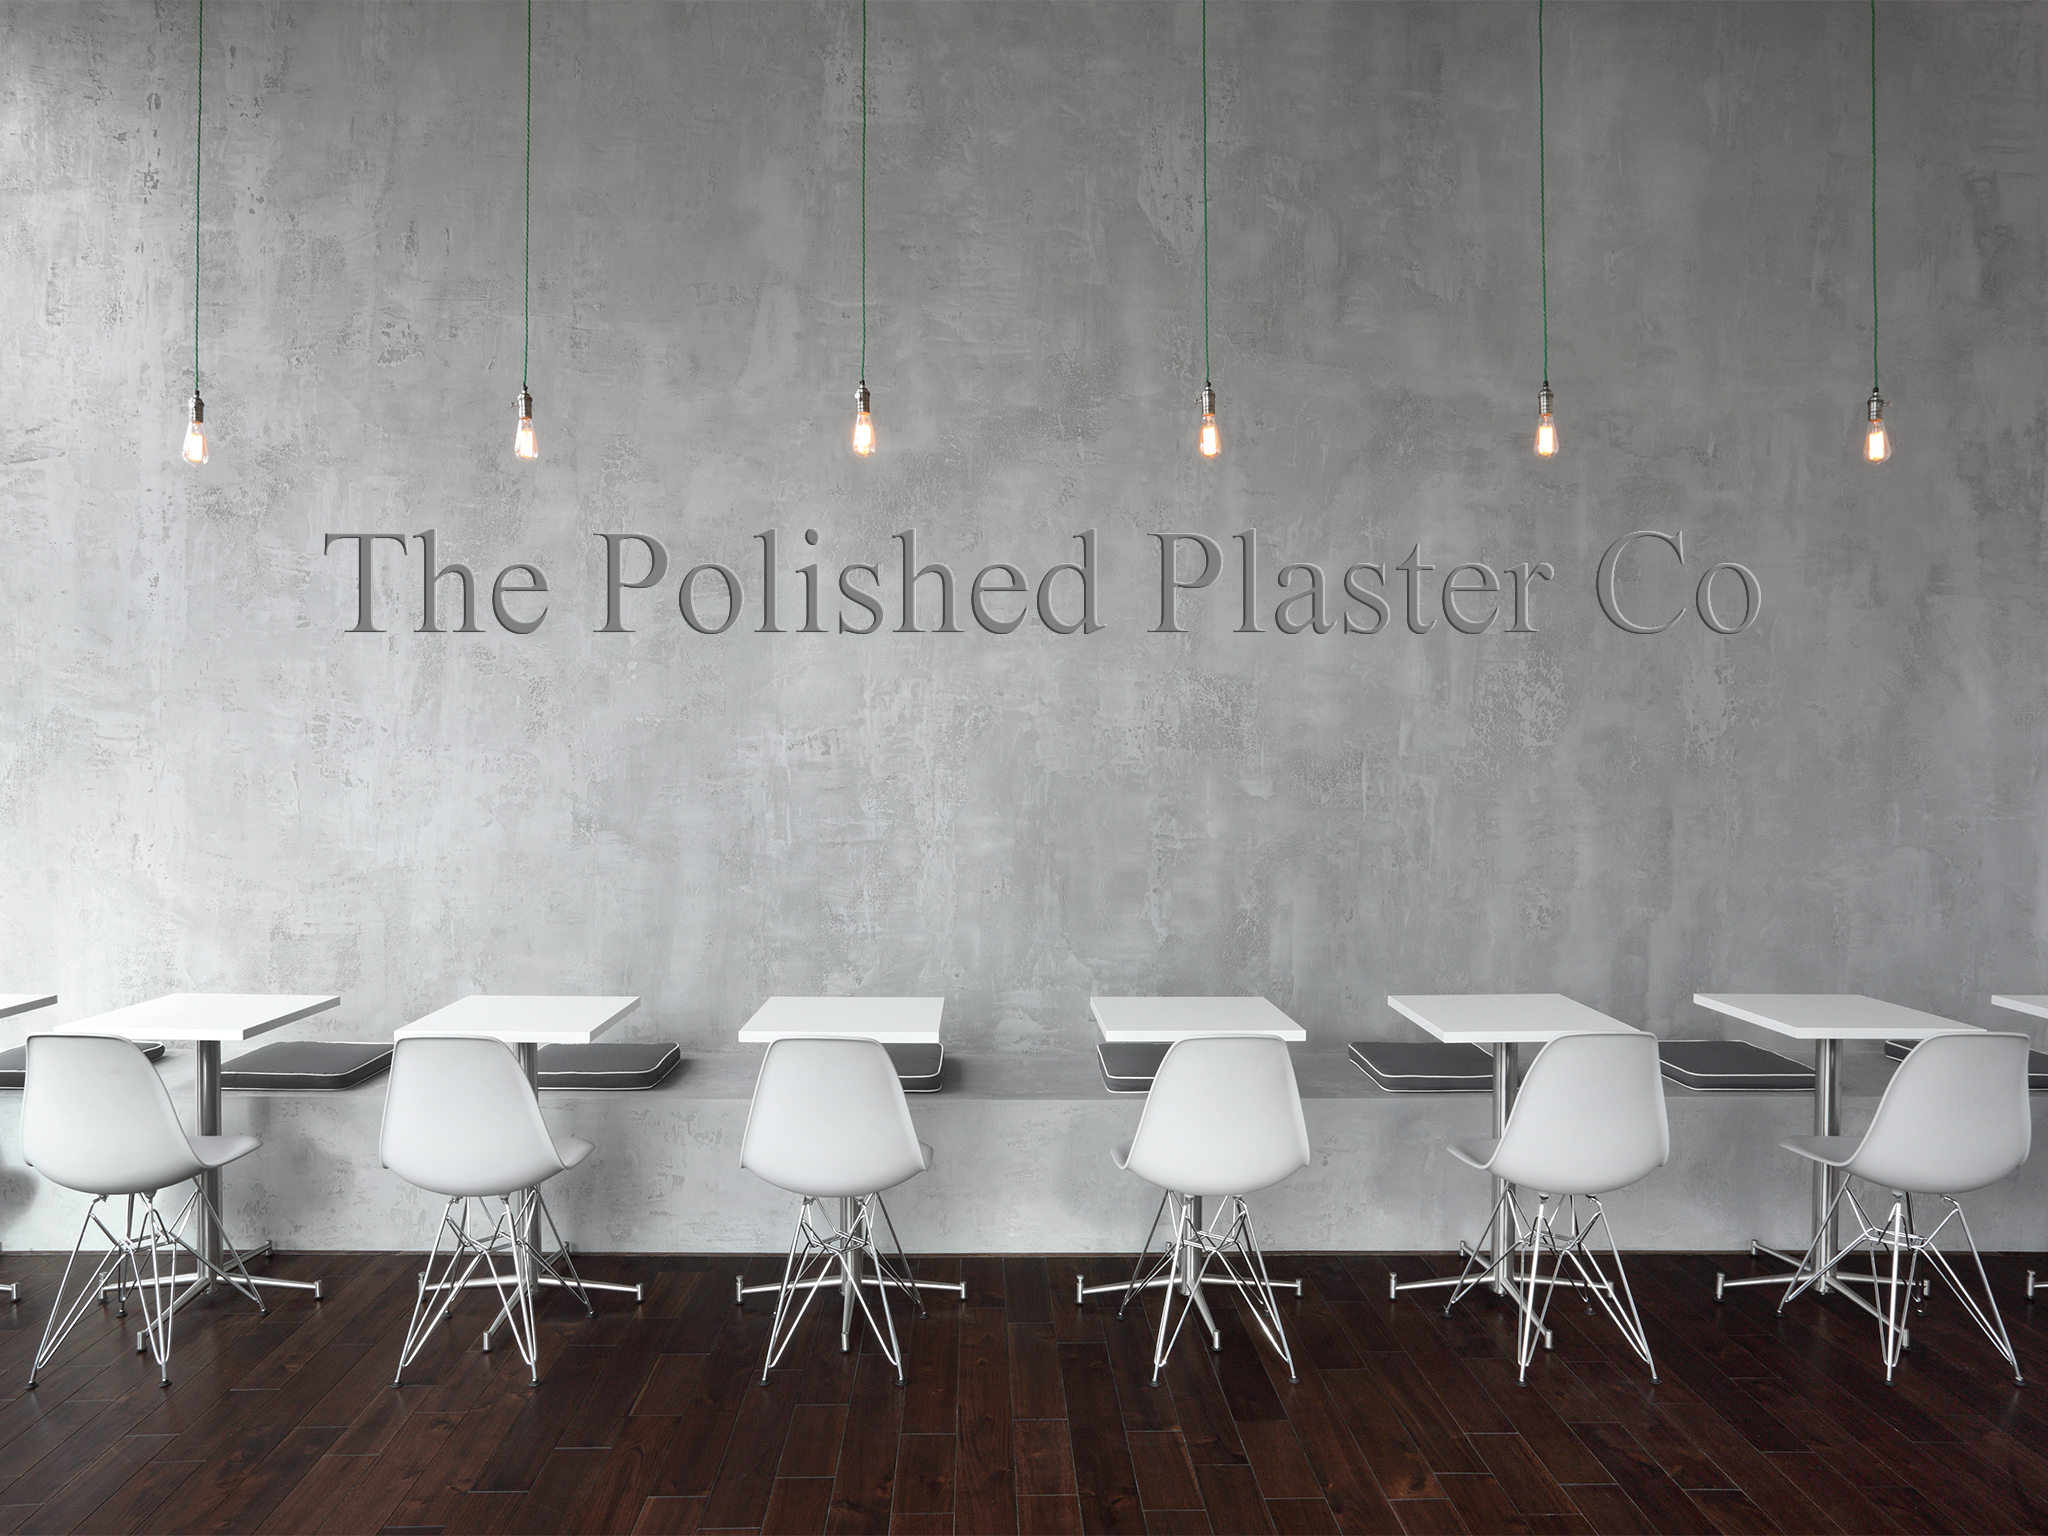 The Polished Plaster Company